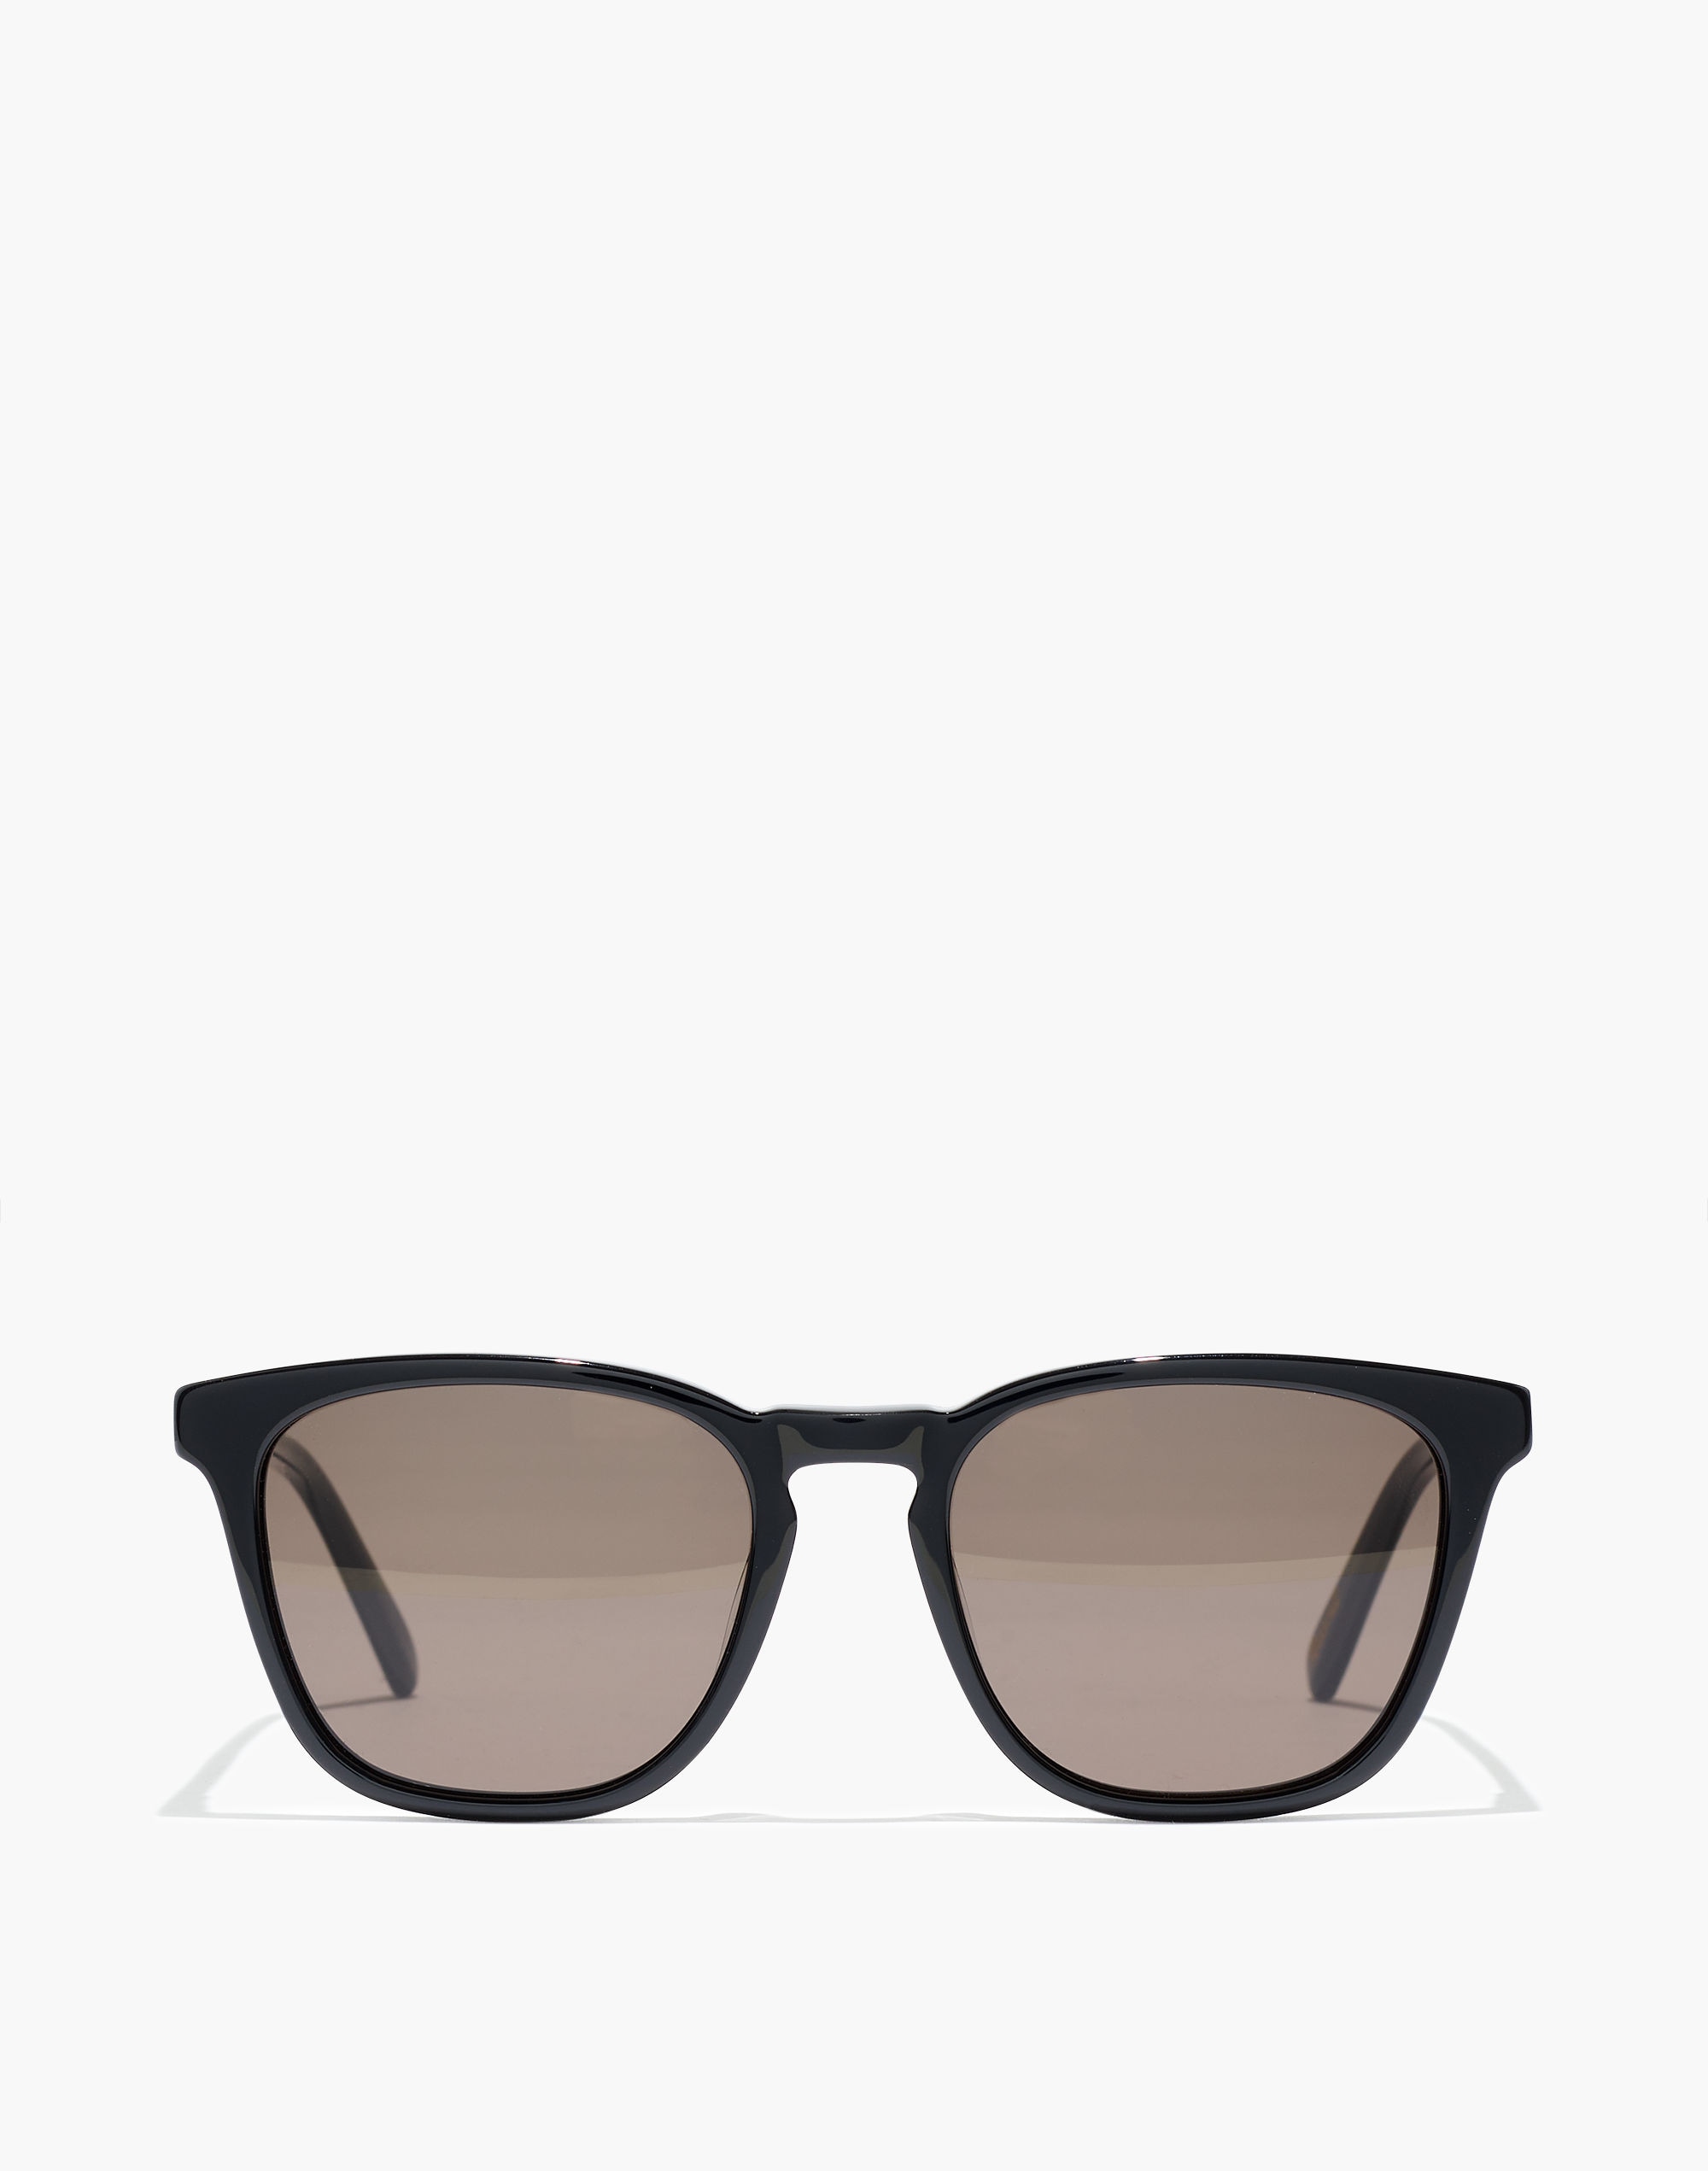 Danford Sunglasses